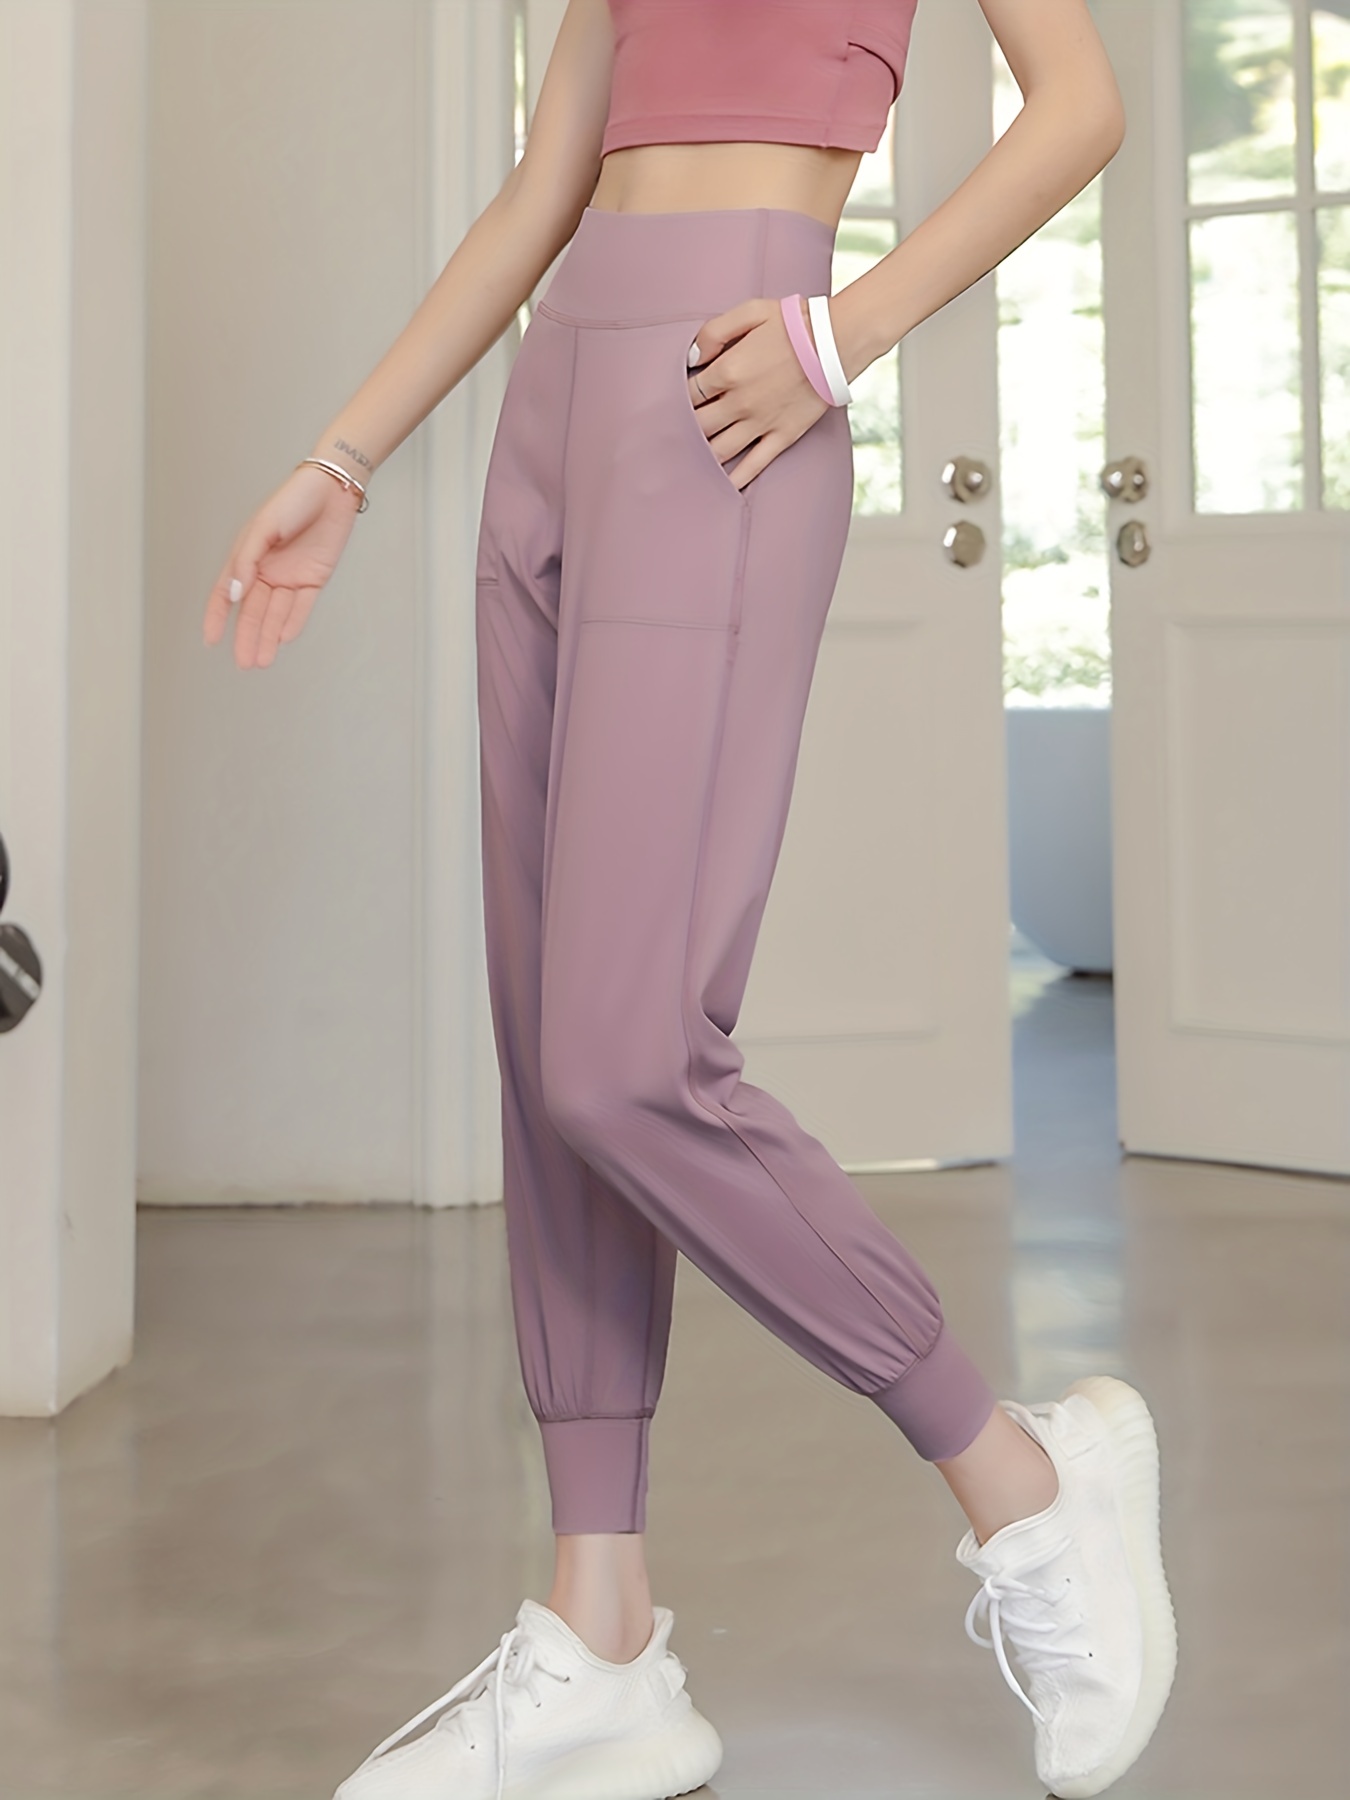 nsendm Unisex Pants Adult Yoga Pants Women High Waist Tall Custom